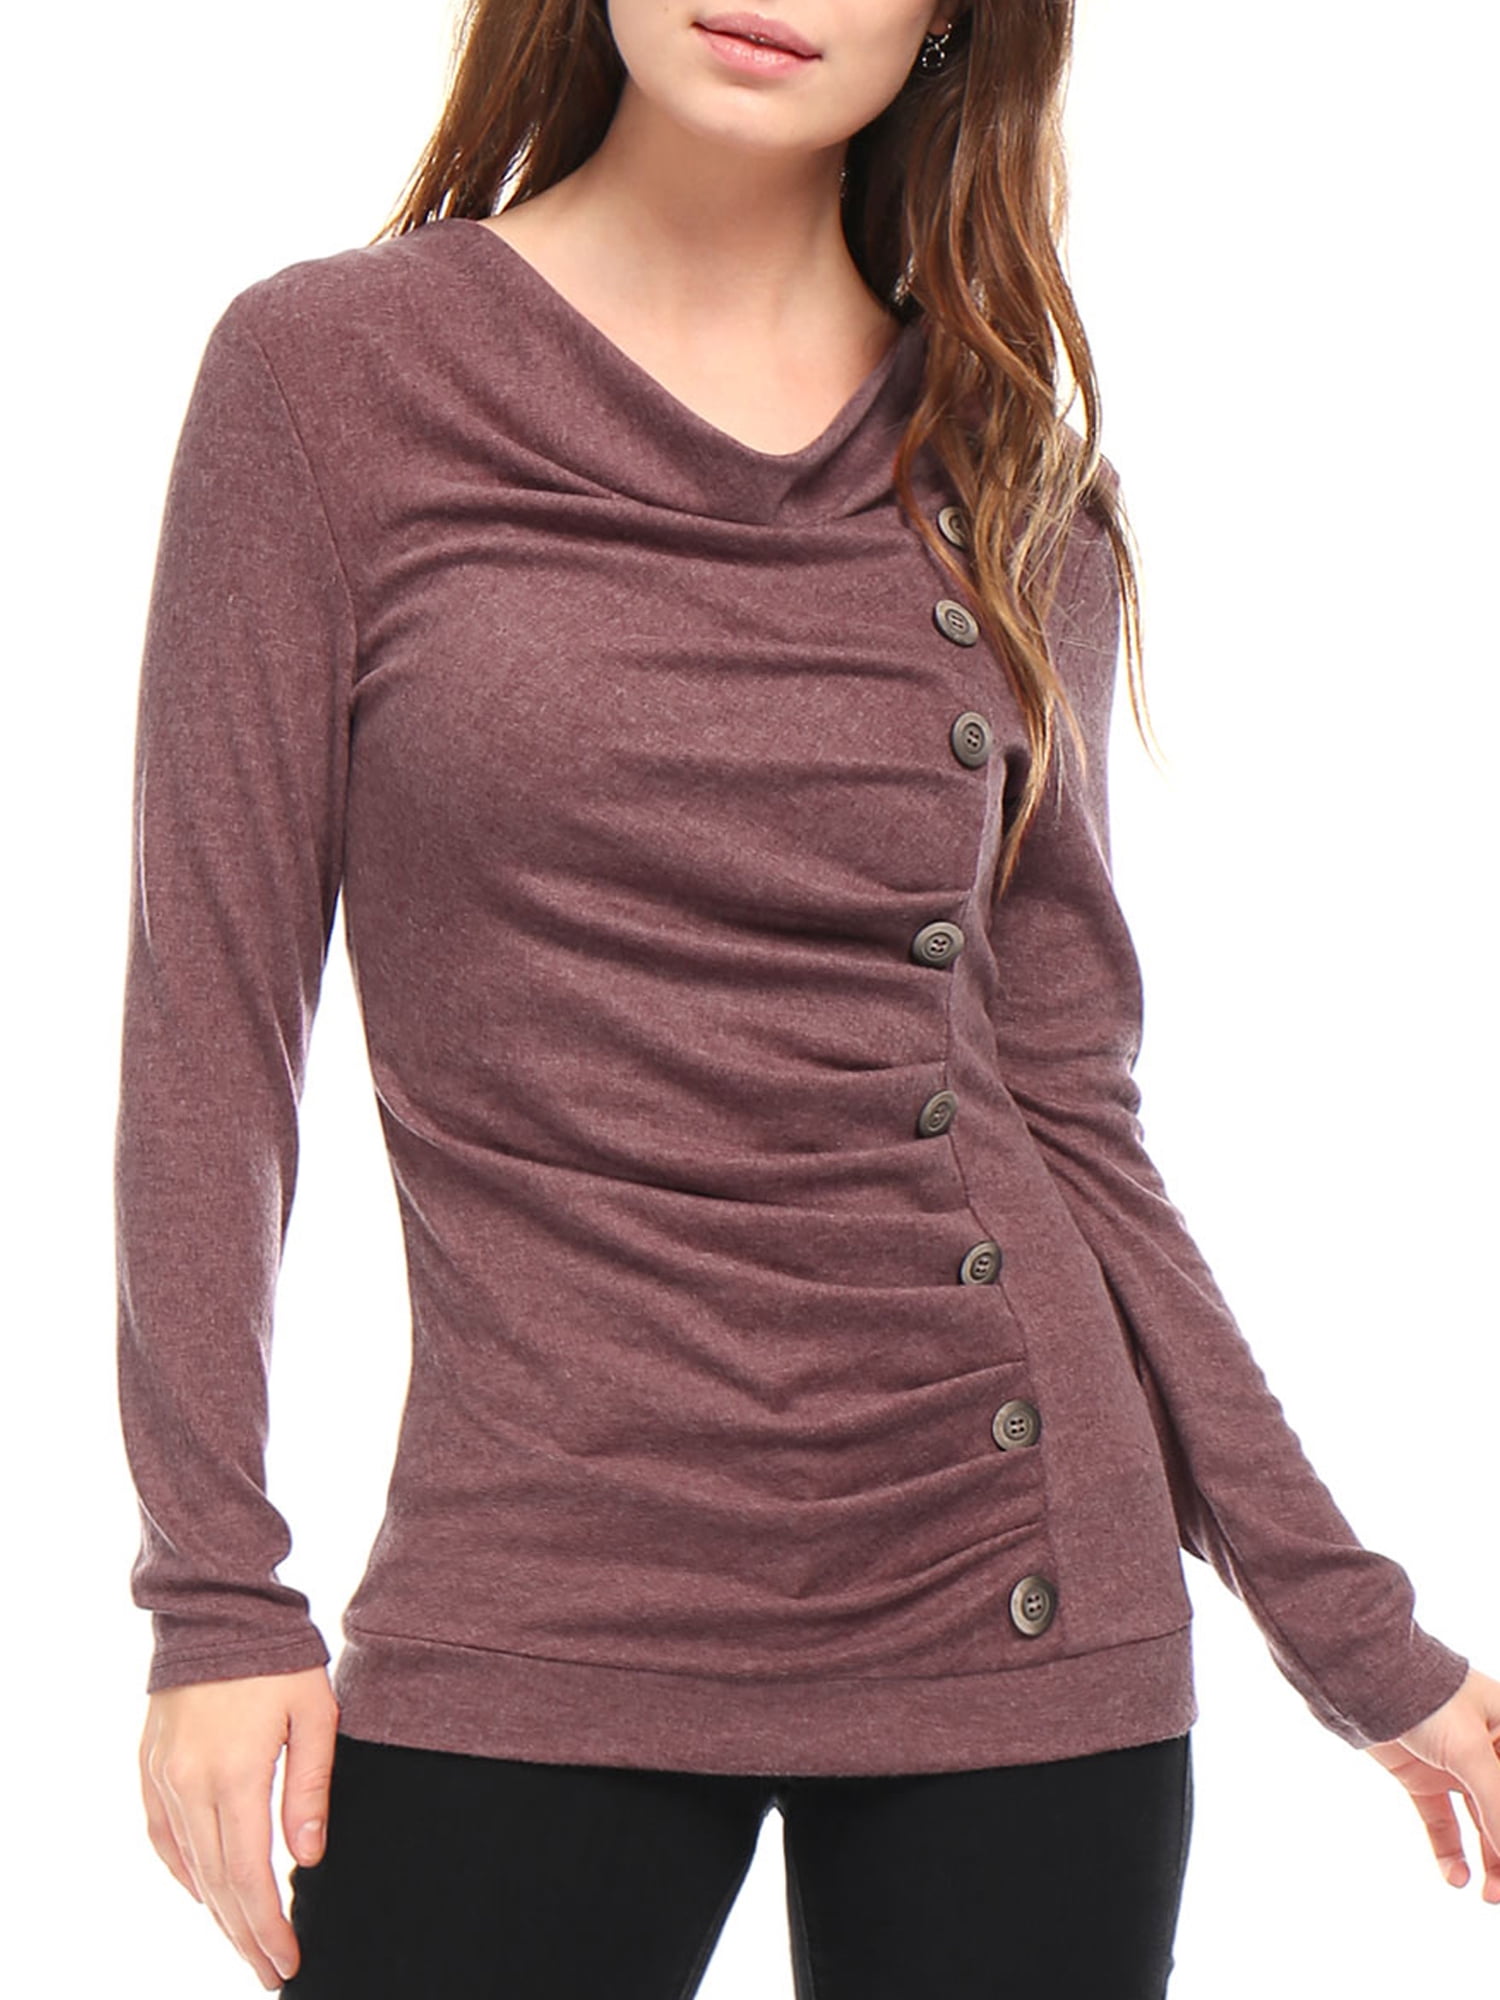 ONLY TOP Women Cowl Neck Plaid Drawstring Button Sheath Ruched Tunic Sweatshirt Asymmetrical Dress Tops # 5 Design 